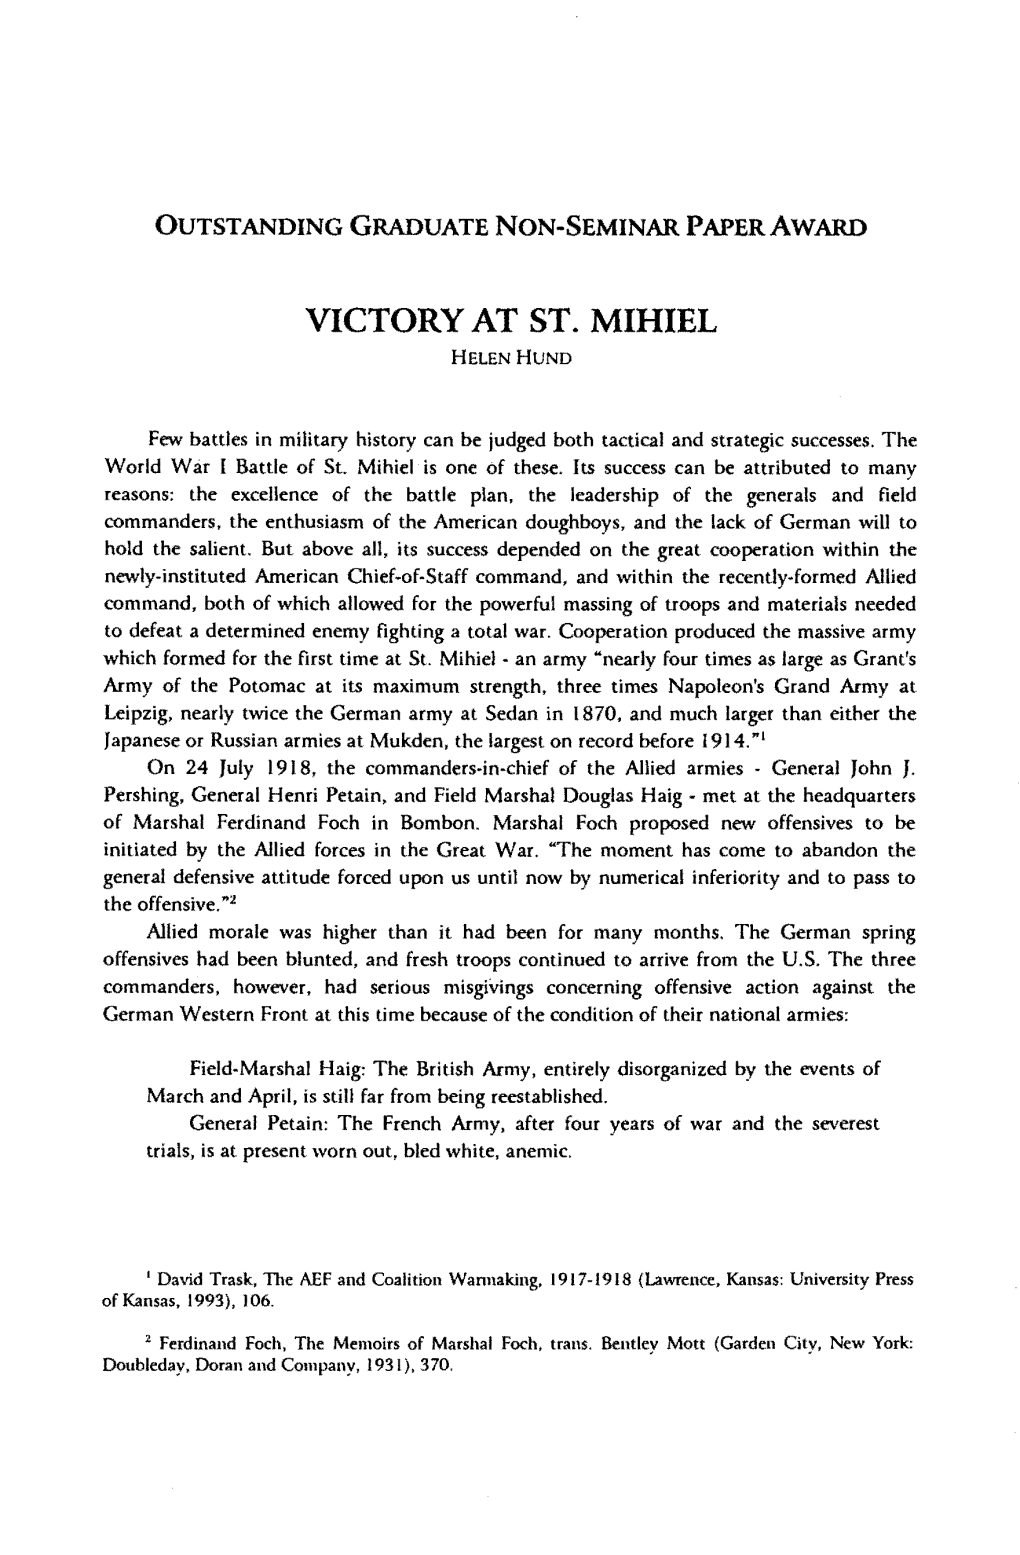 Victory at St. Mihiel Helenhund